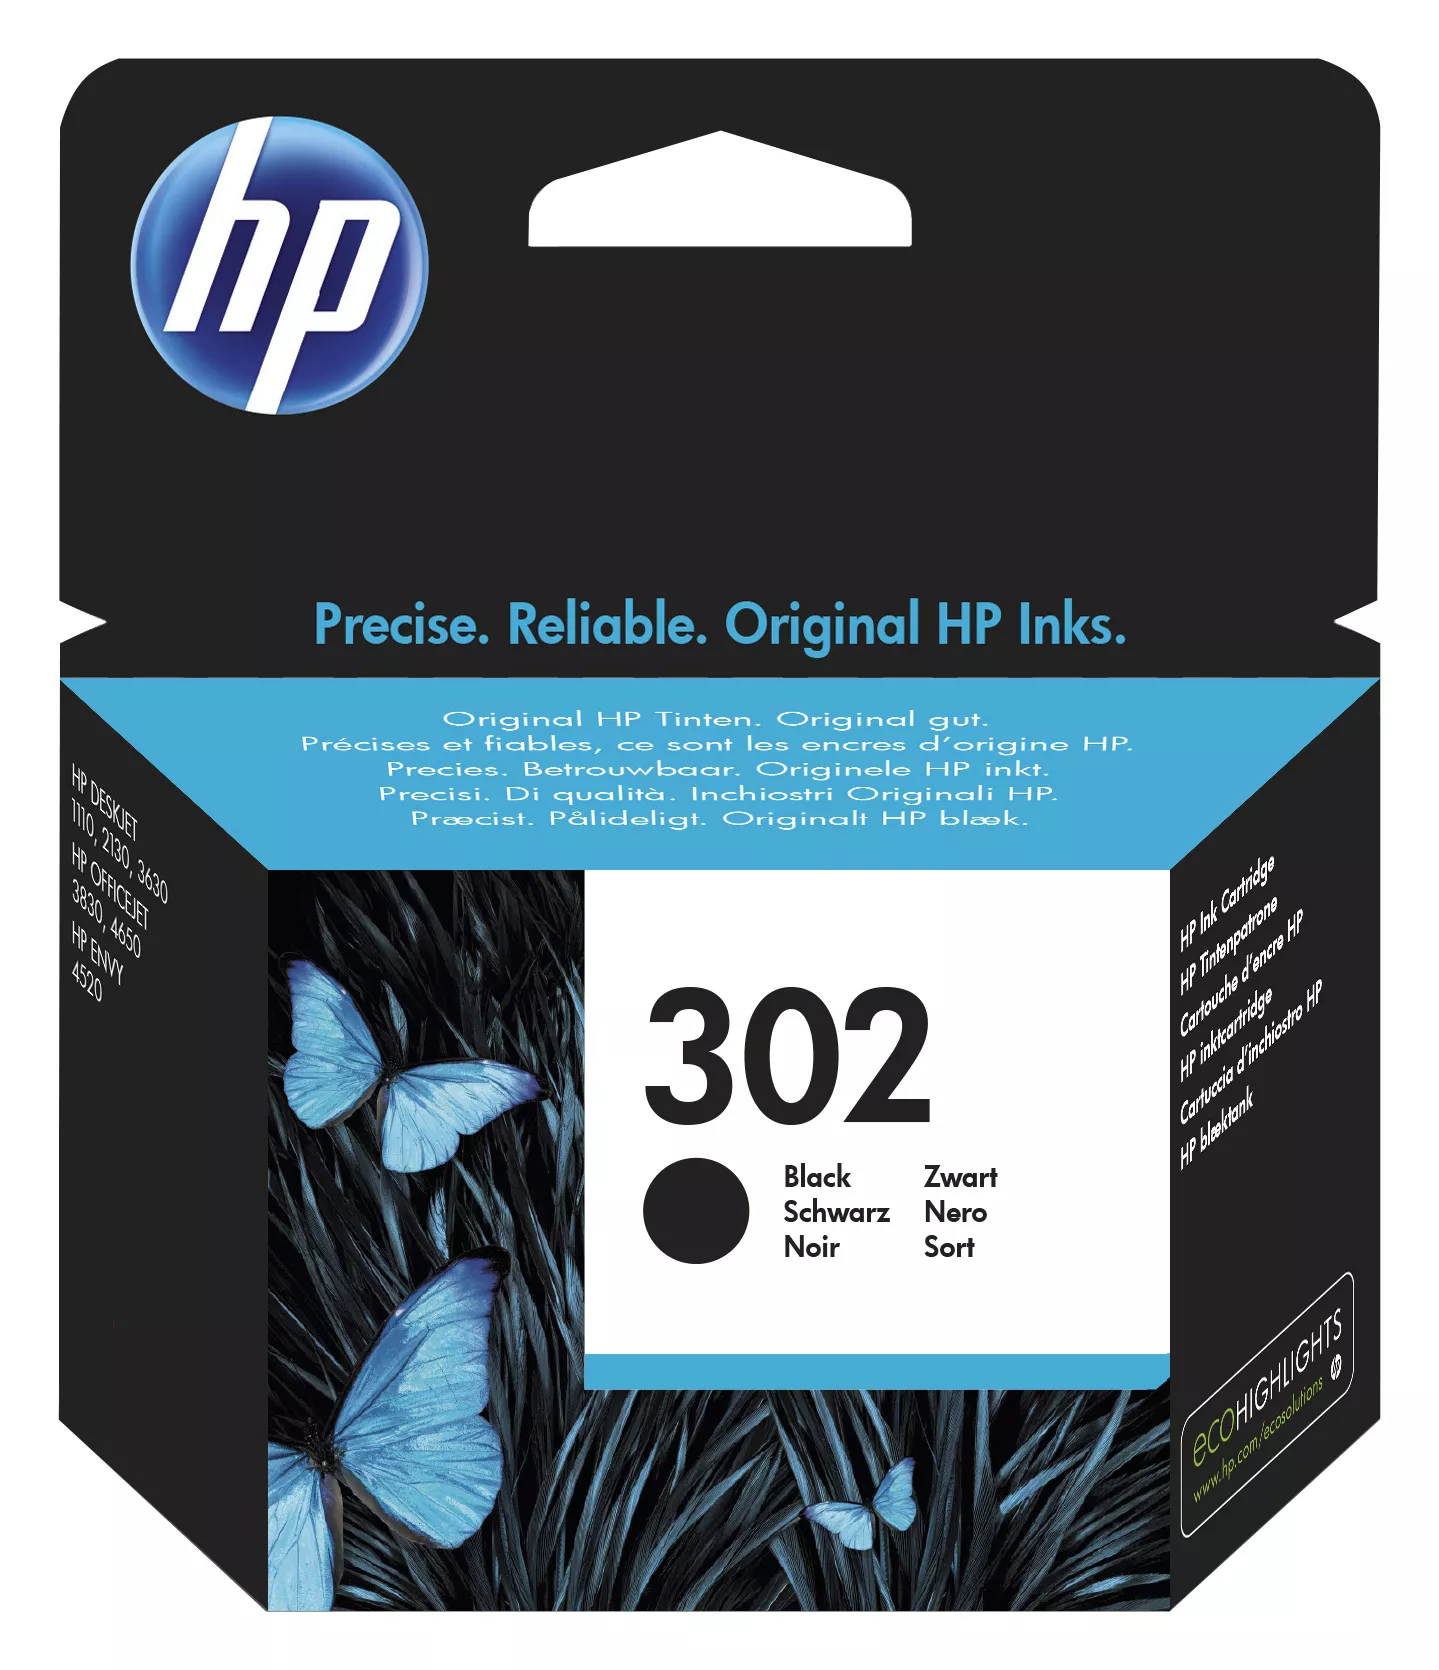 Vente HP 302 original Black Ink cartridge F6U66AE 301Blister HP au meilleur prix - visuel 2